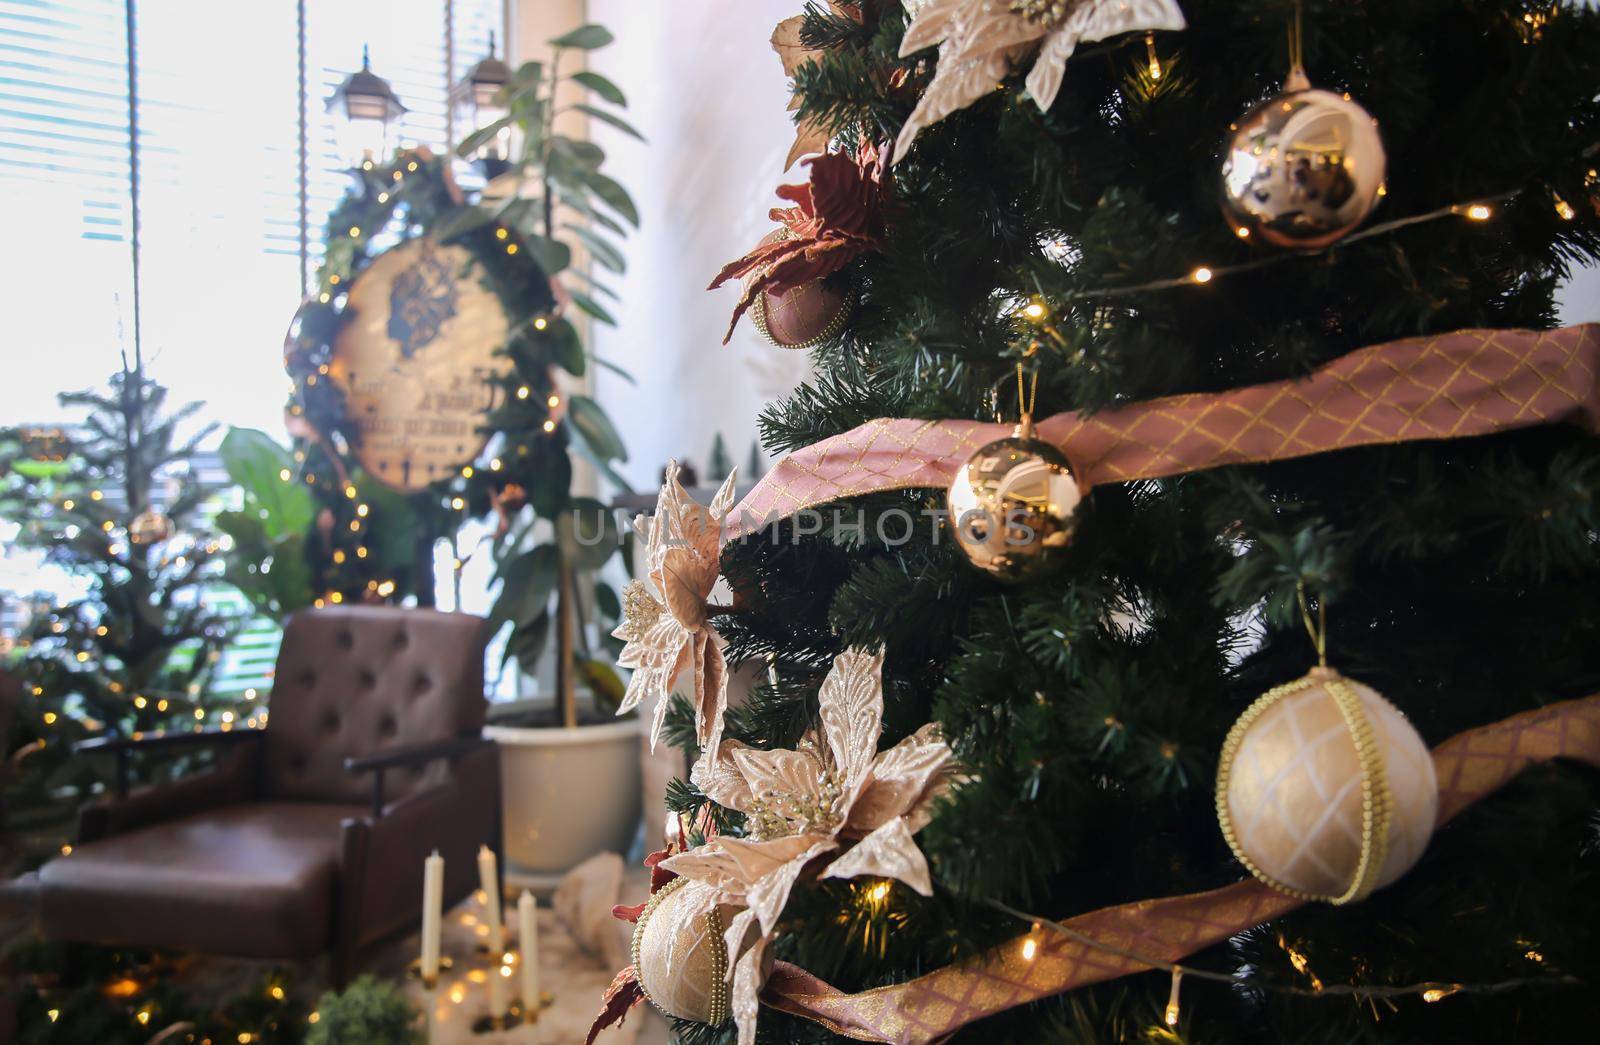 Christmas tree and decoration